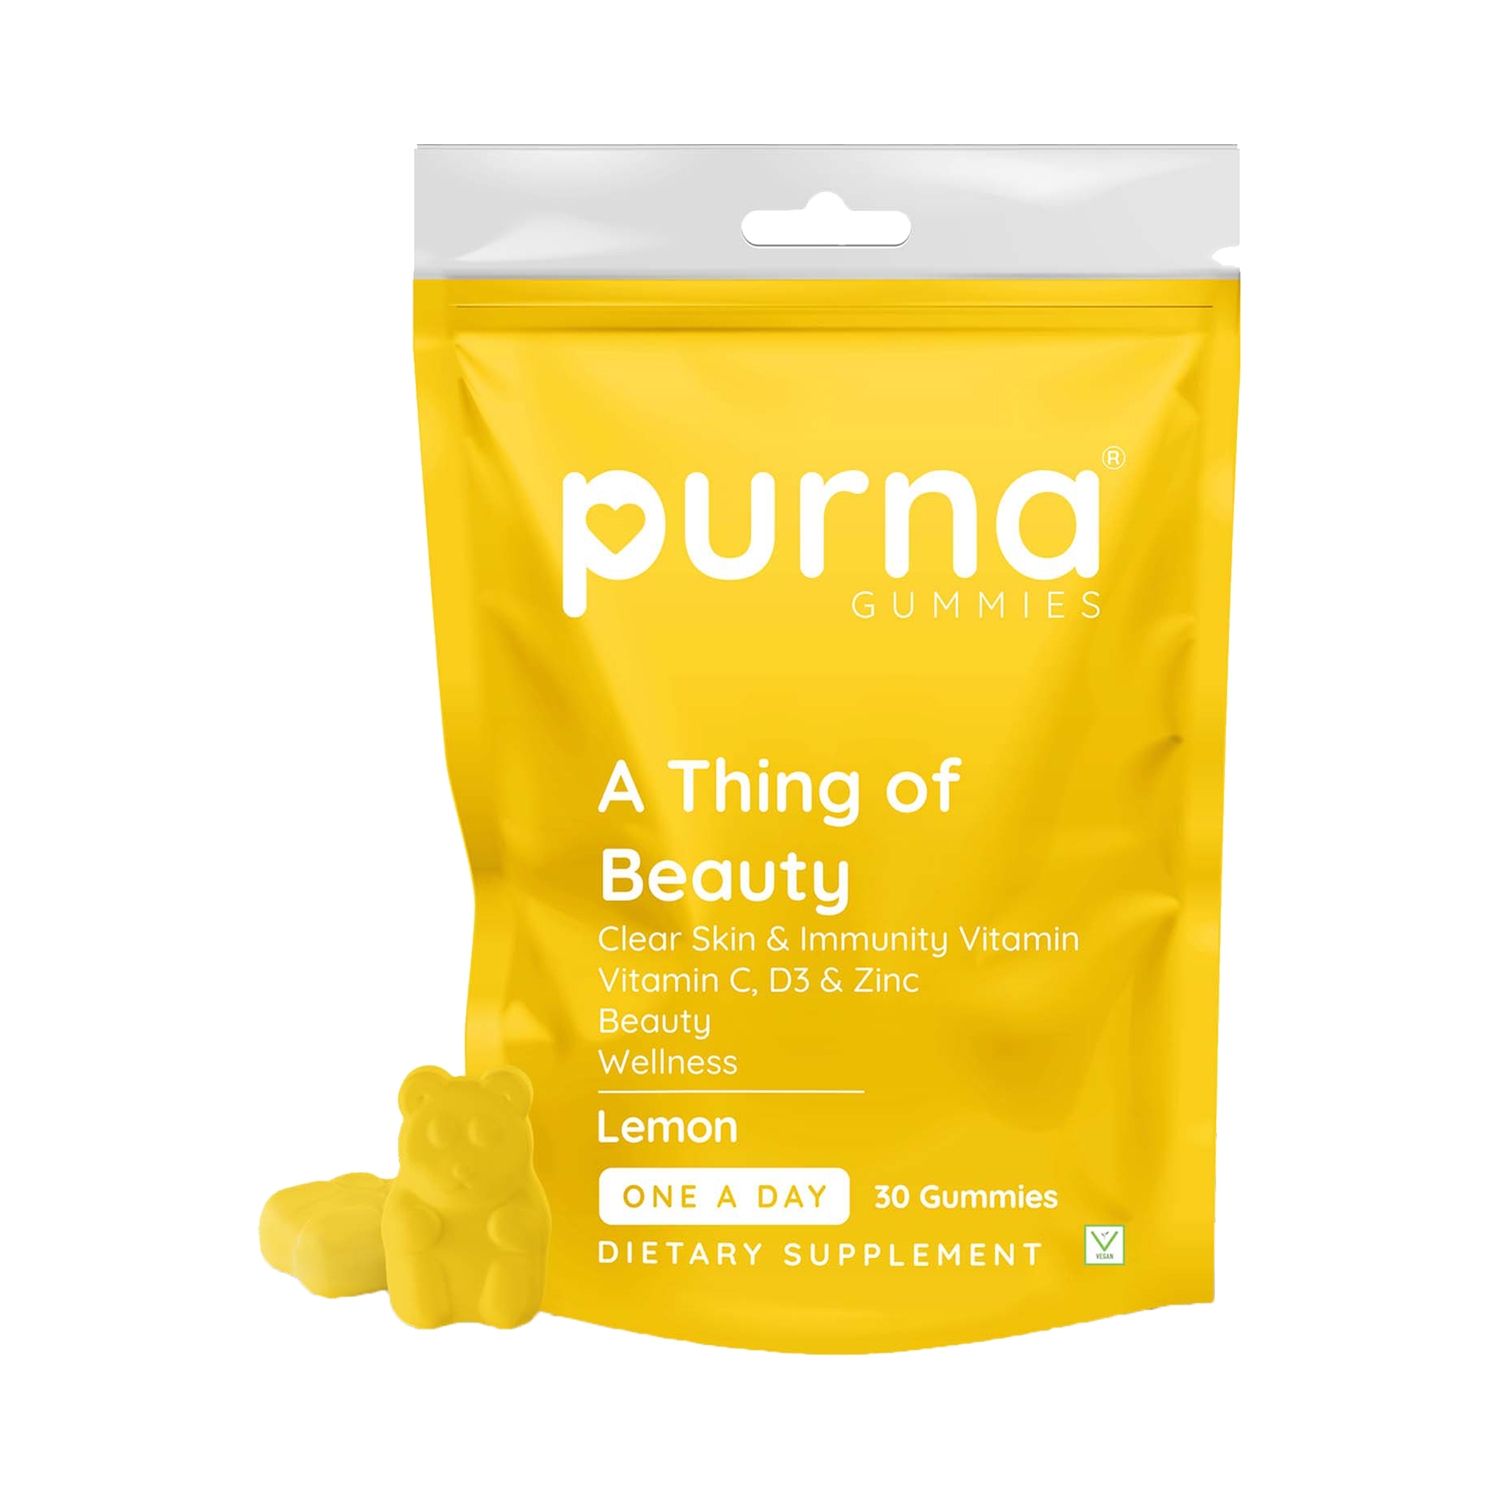 Purna Gummies | Purna Gummies Vitamin C Lemon Gummies With Vitamin D3 And Zinc For Immunity & Clear Skin - (30 Pcs)